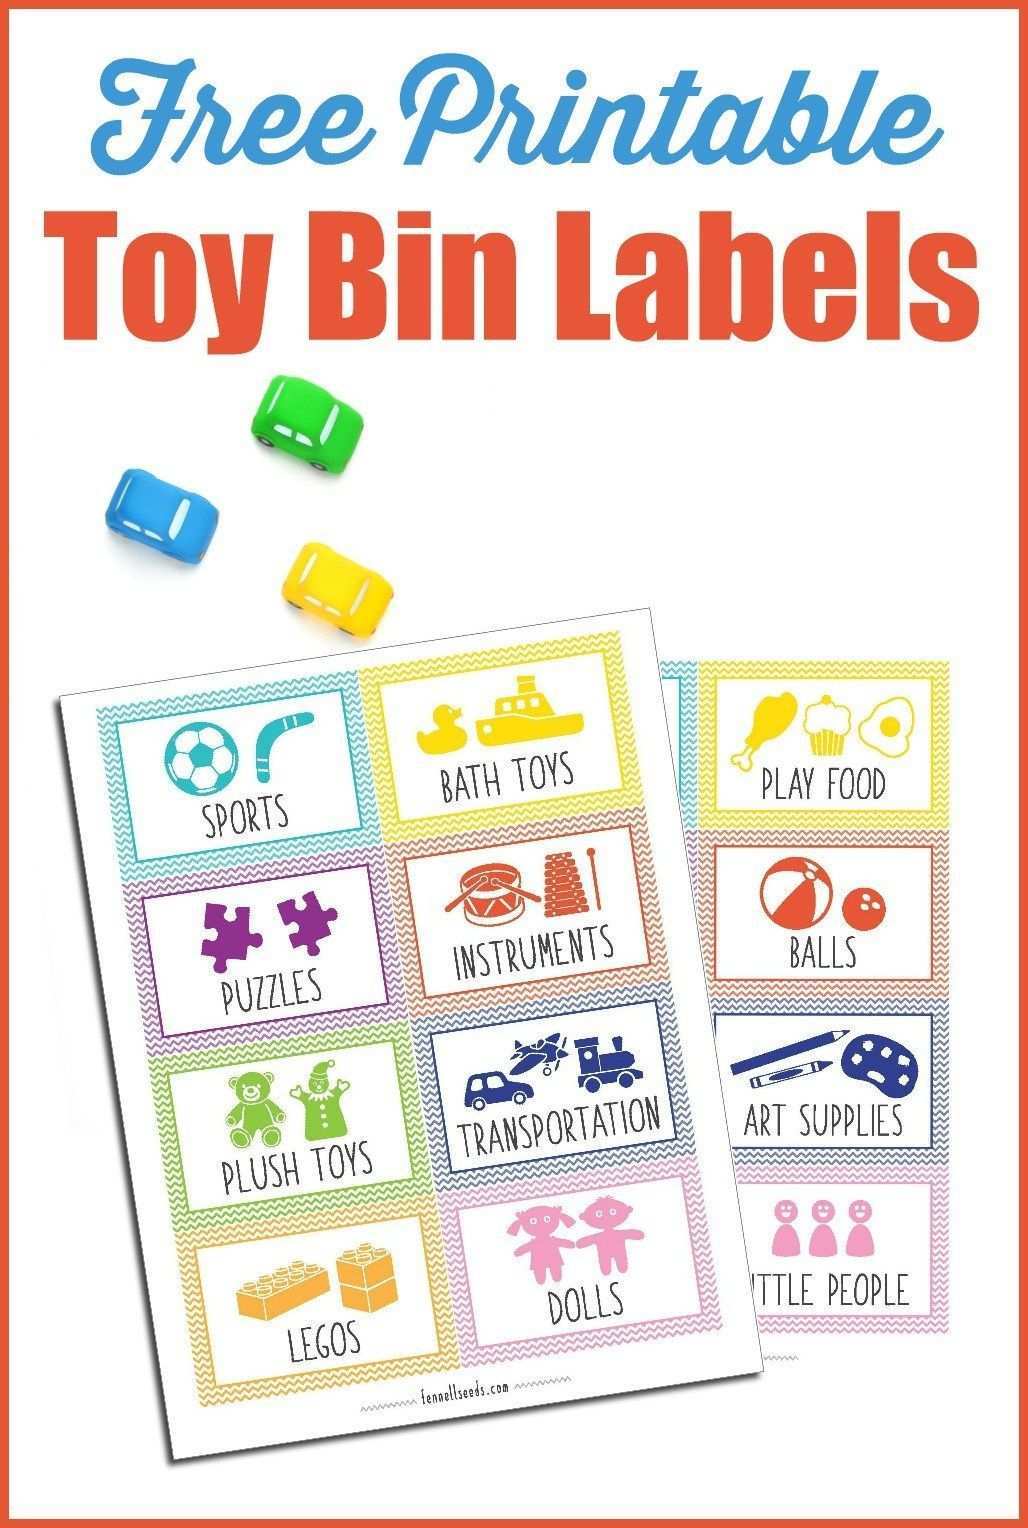 Kidsroom Printable Toy Bin Labels That Are Cute And Free In 2020 Toy Bin Labels Toy Bins Printable Toys